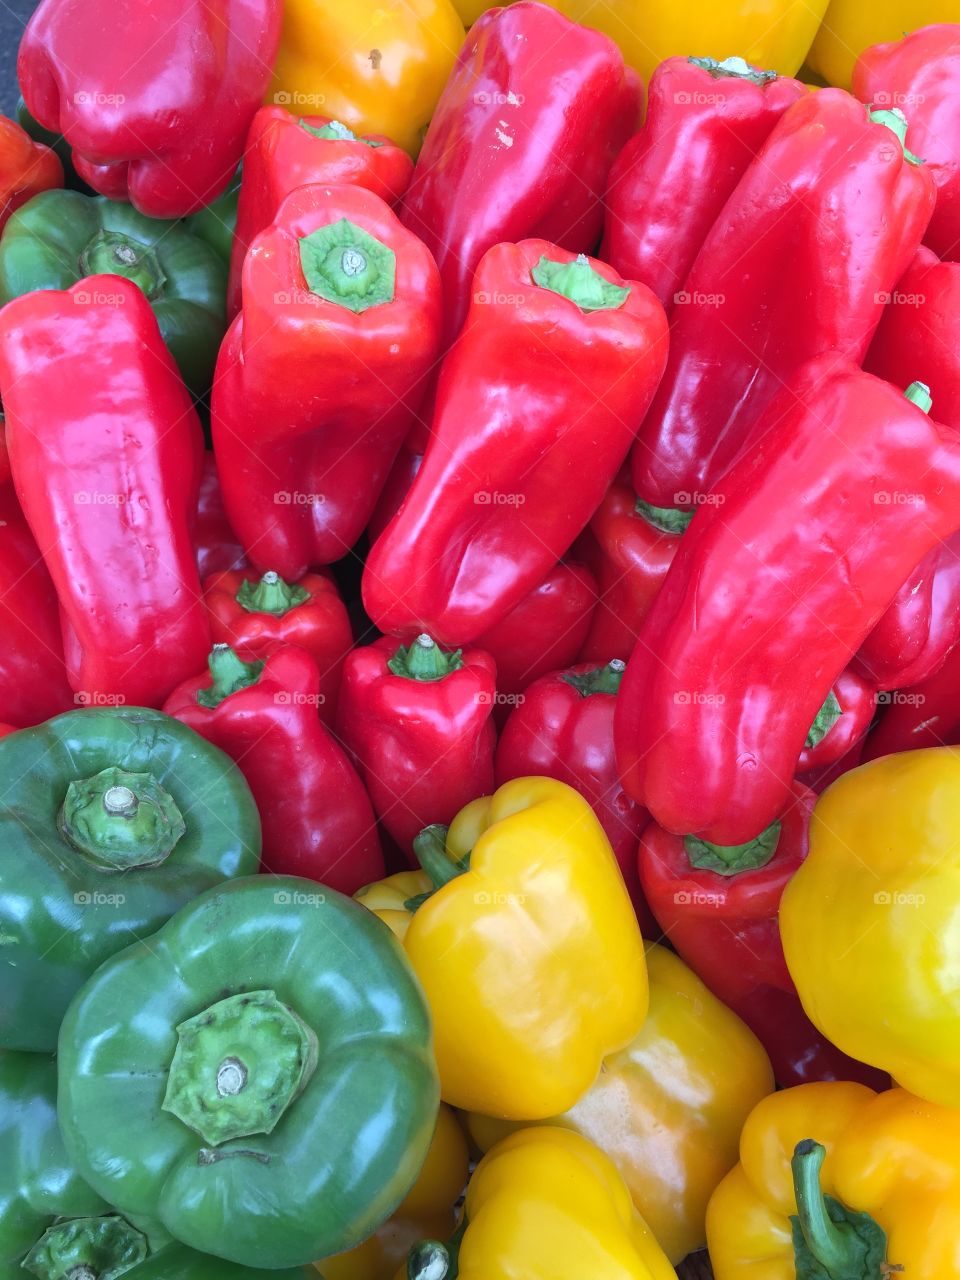 Farmers market peppers